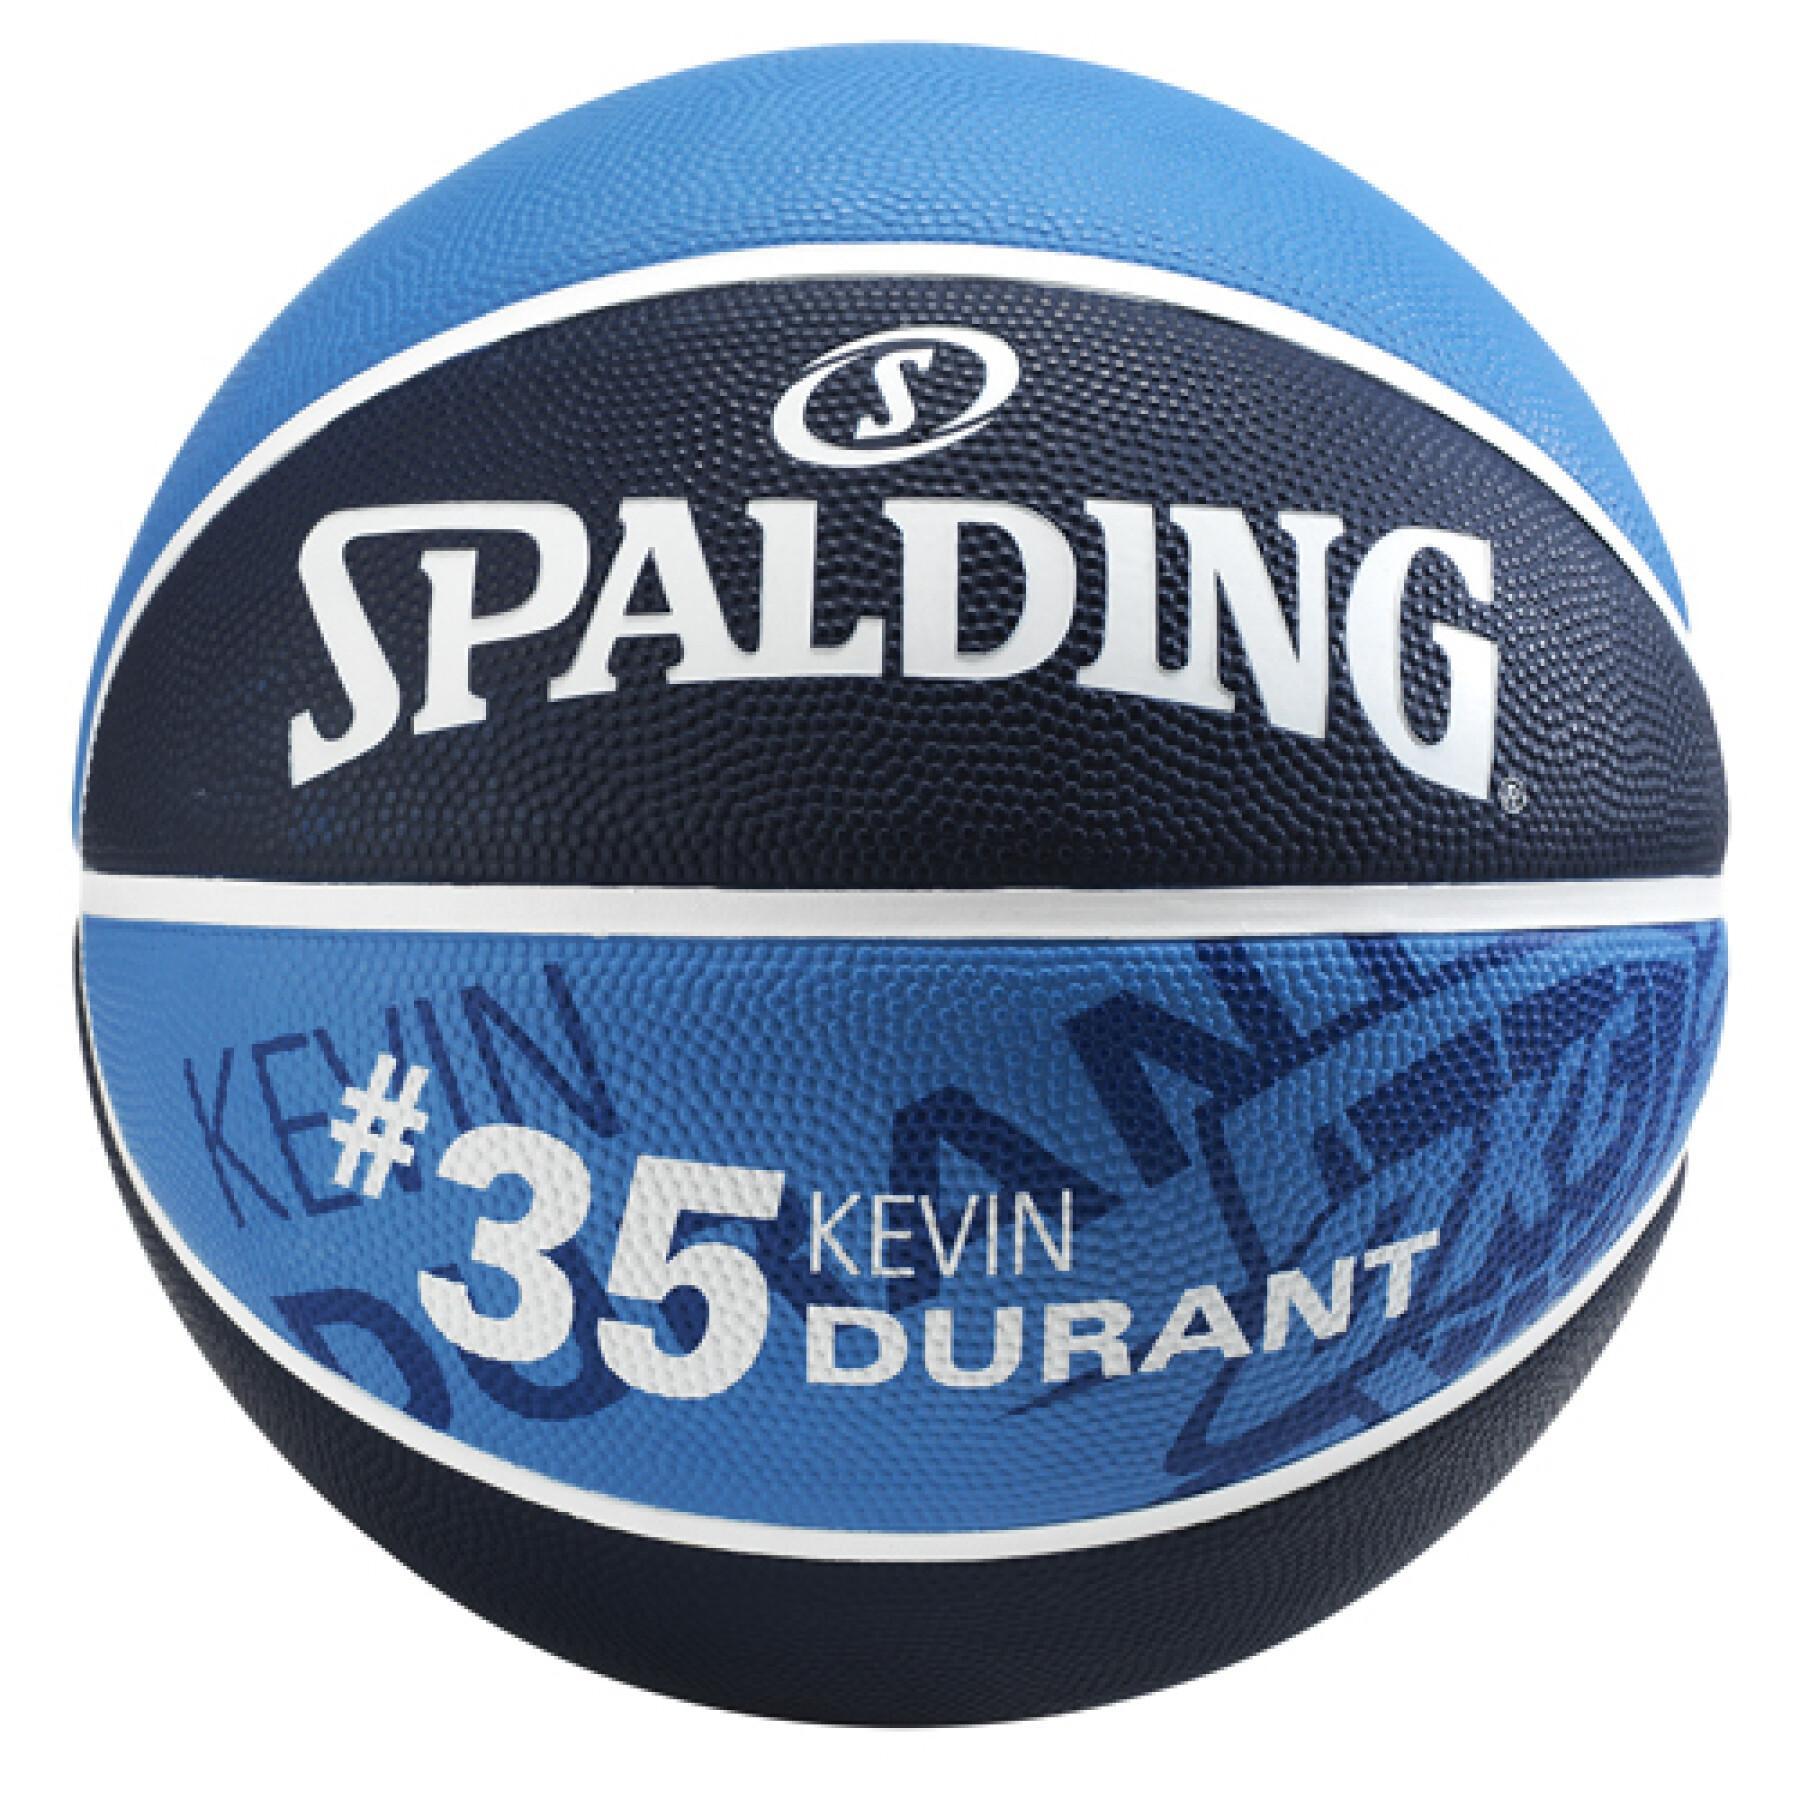 Balon Spalding Player Kevin Durant